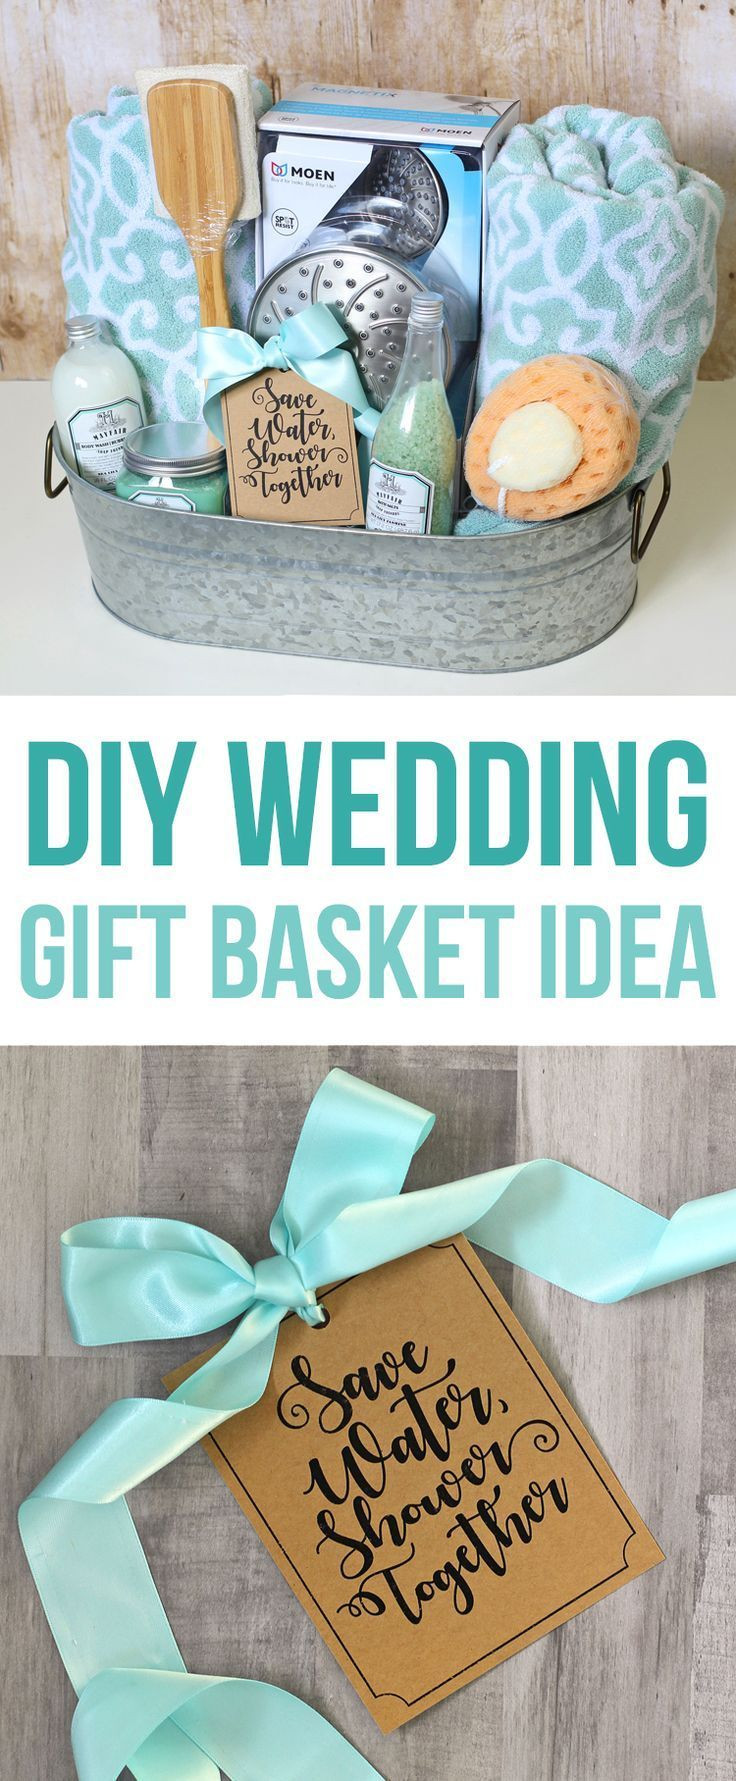 Gift Ideas For A Wedding
 Shower Themed DIY Wedding Gift Basket Idea